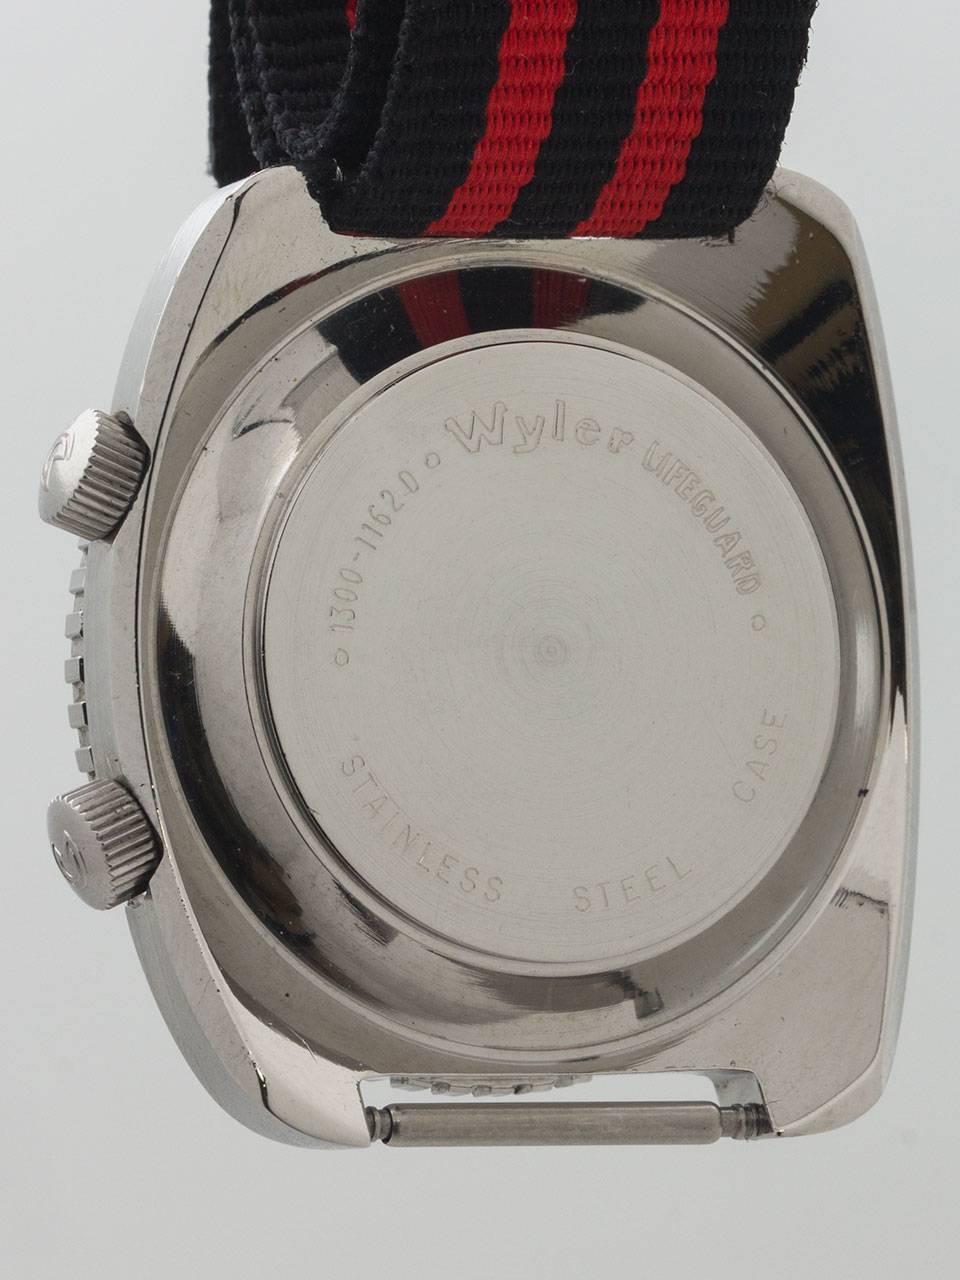 Men's Wyler stainless steel Alarm “Moderne” Manual Wristwatch, circa 1960s  